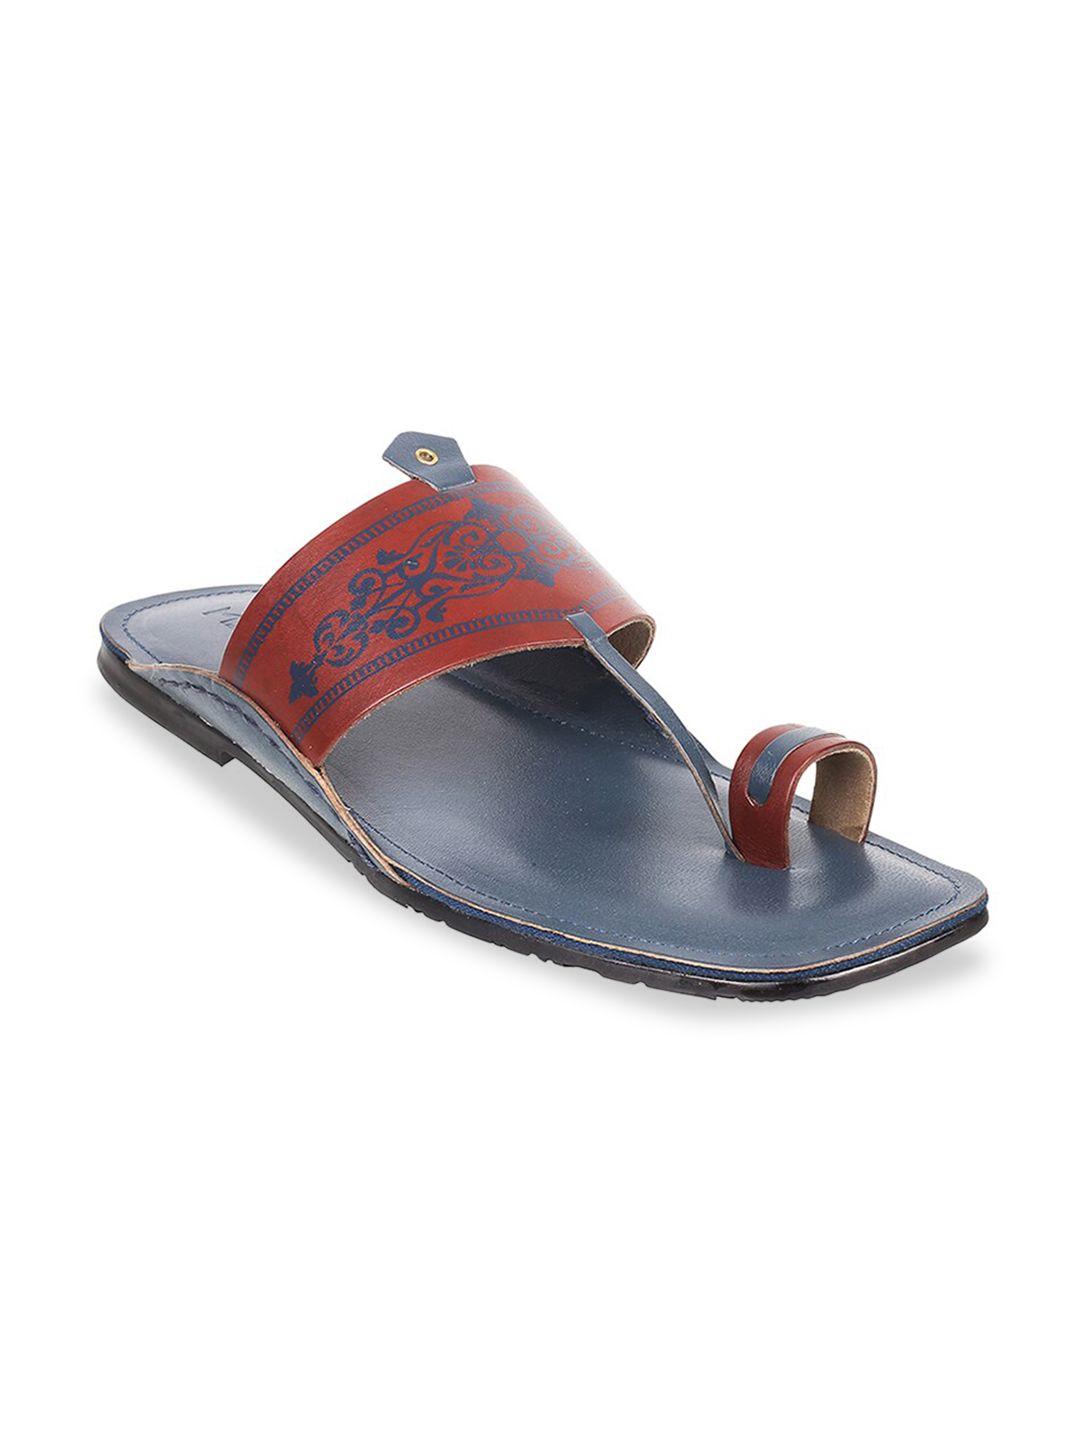 metro men ethnic leather comfort sandals